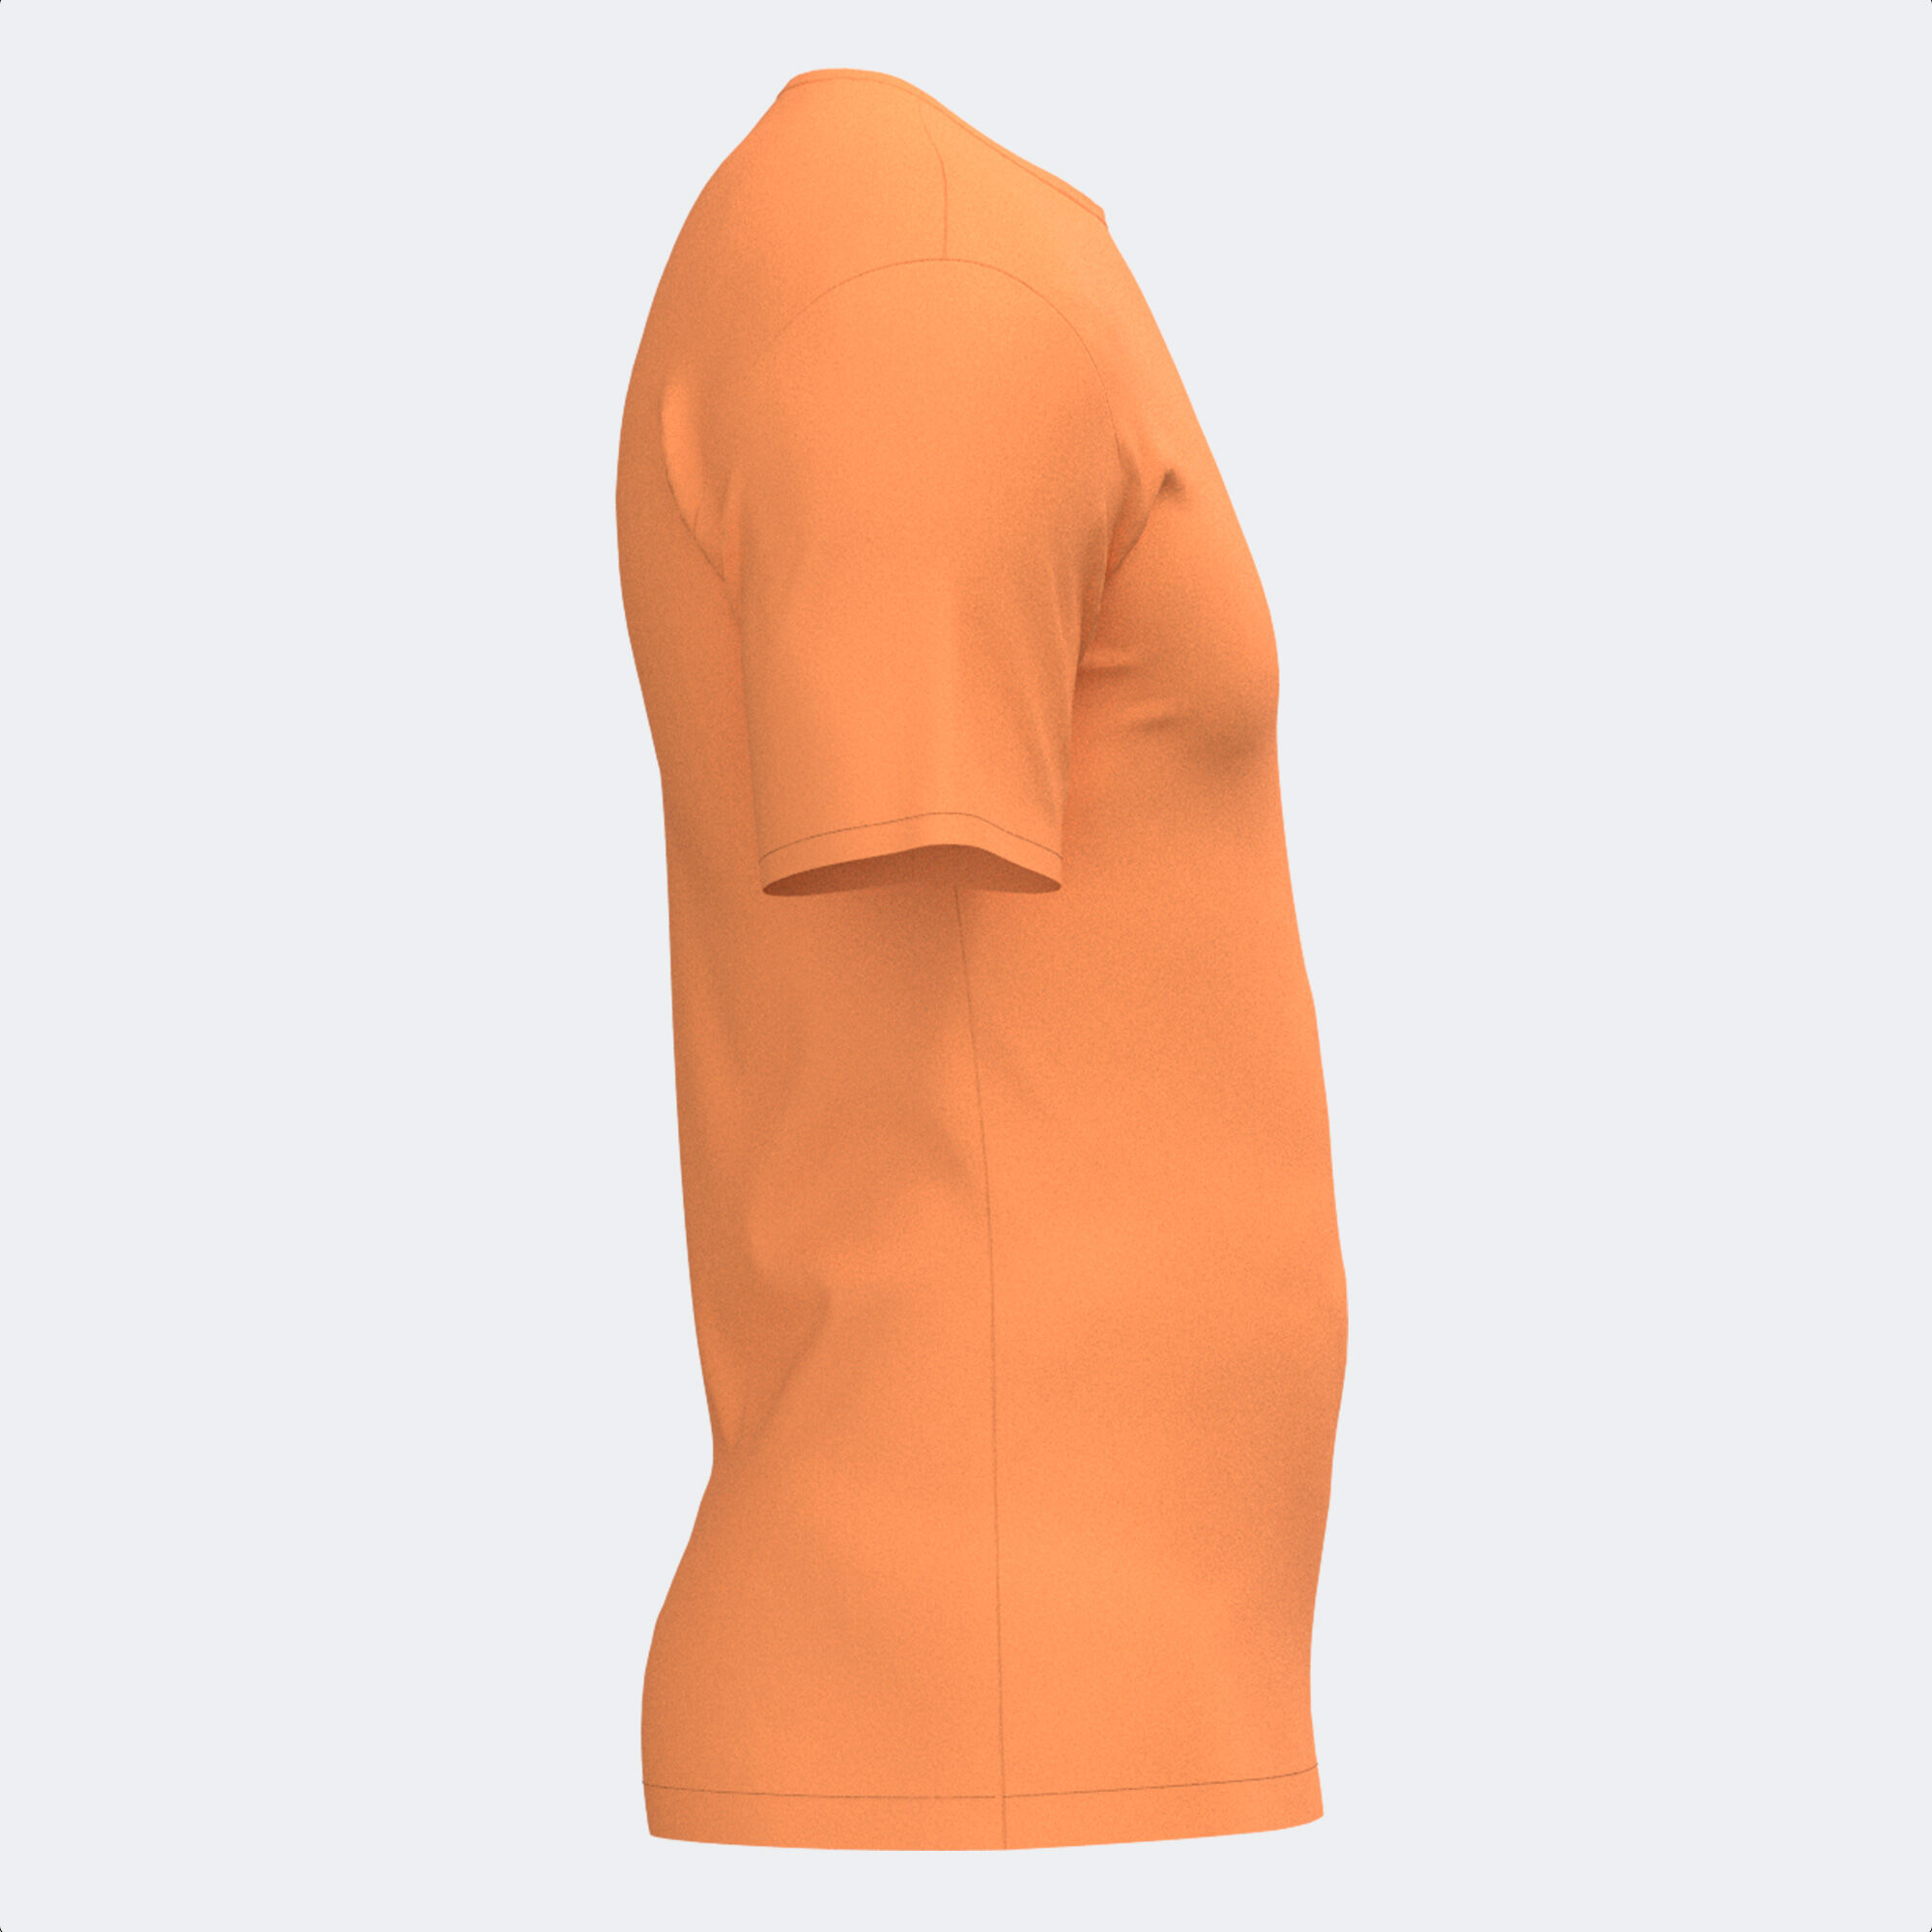 Camiseta manga corta hombre Desert naranja